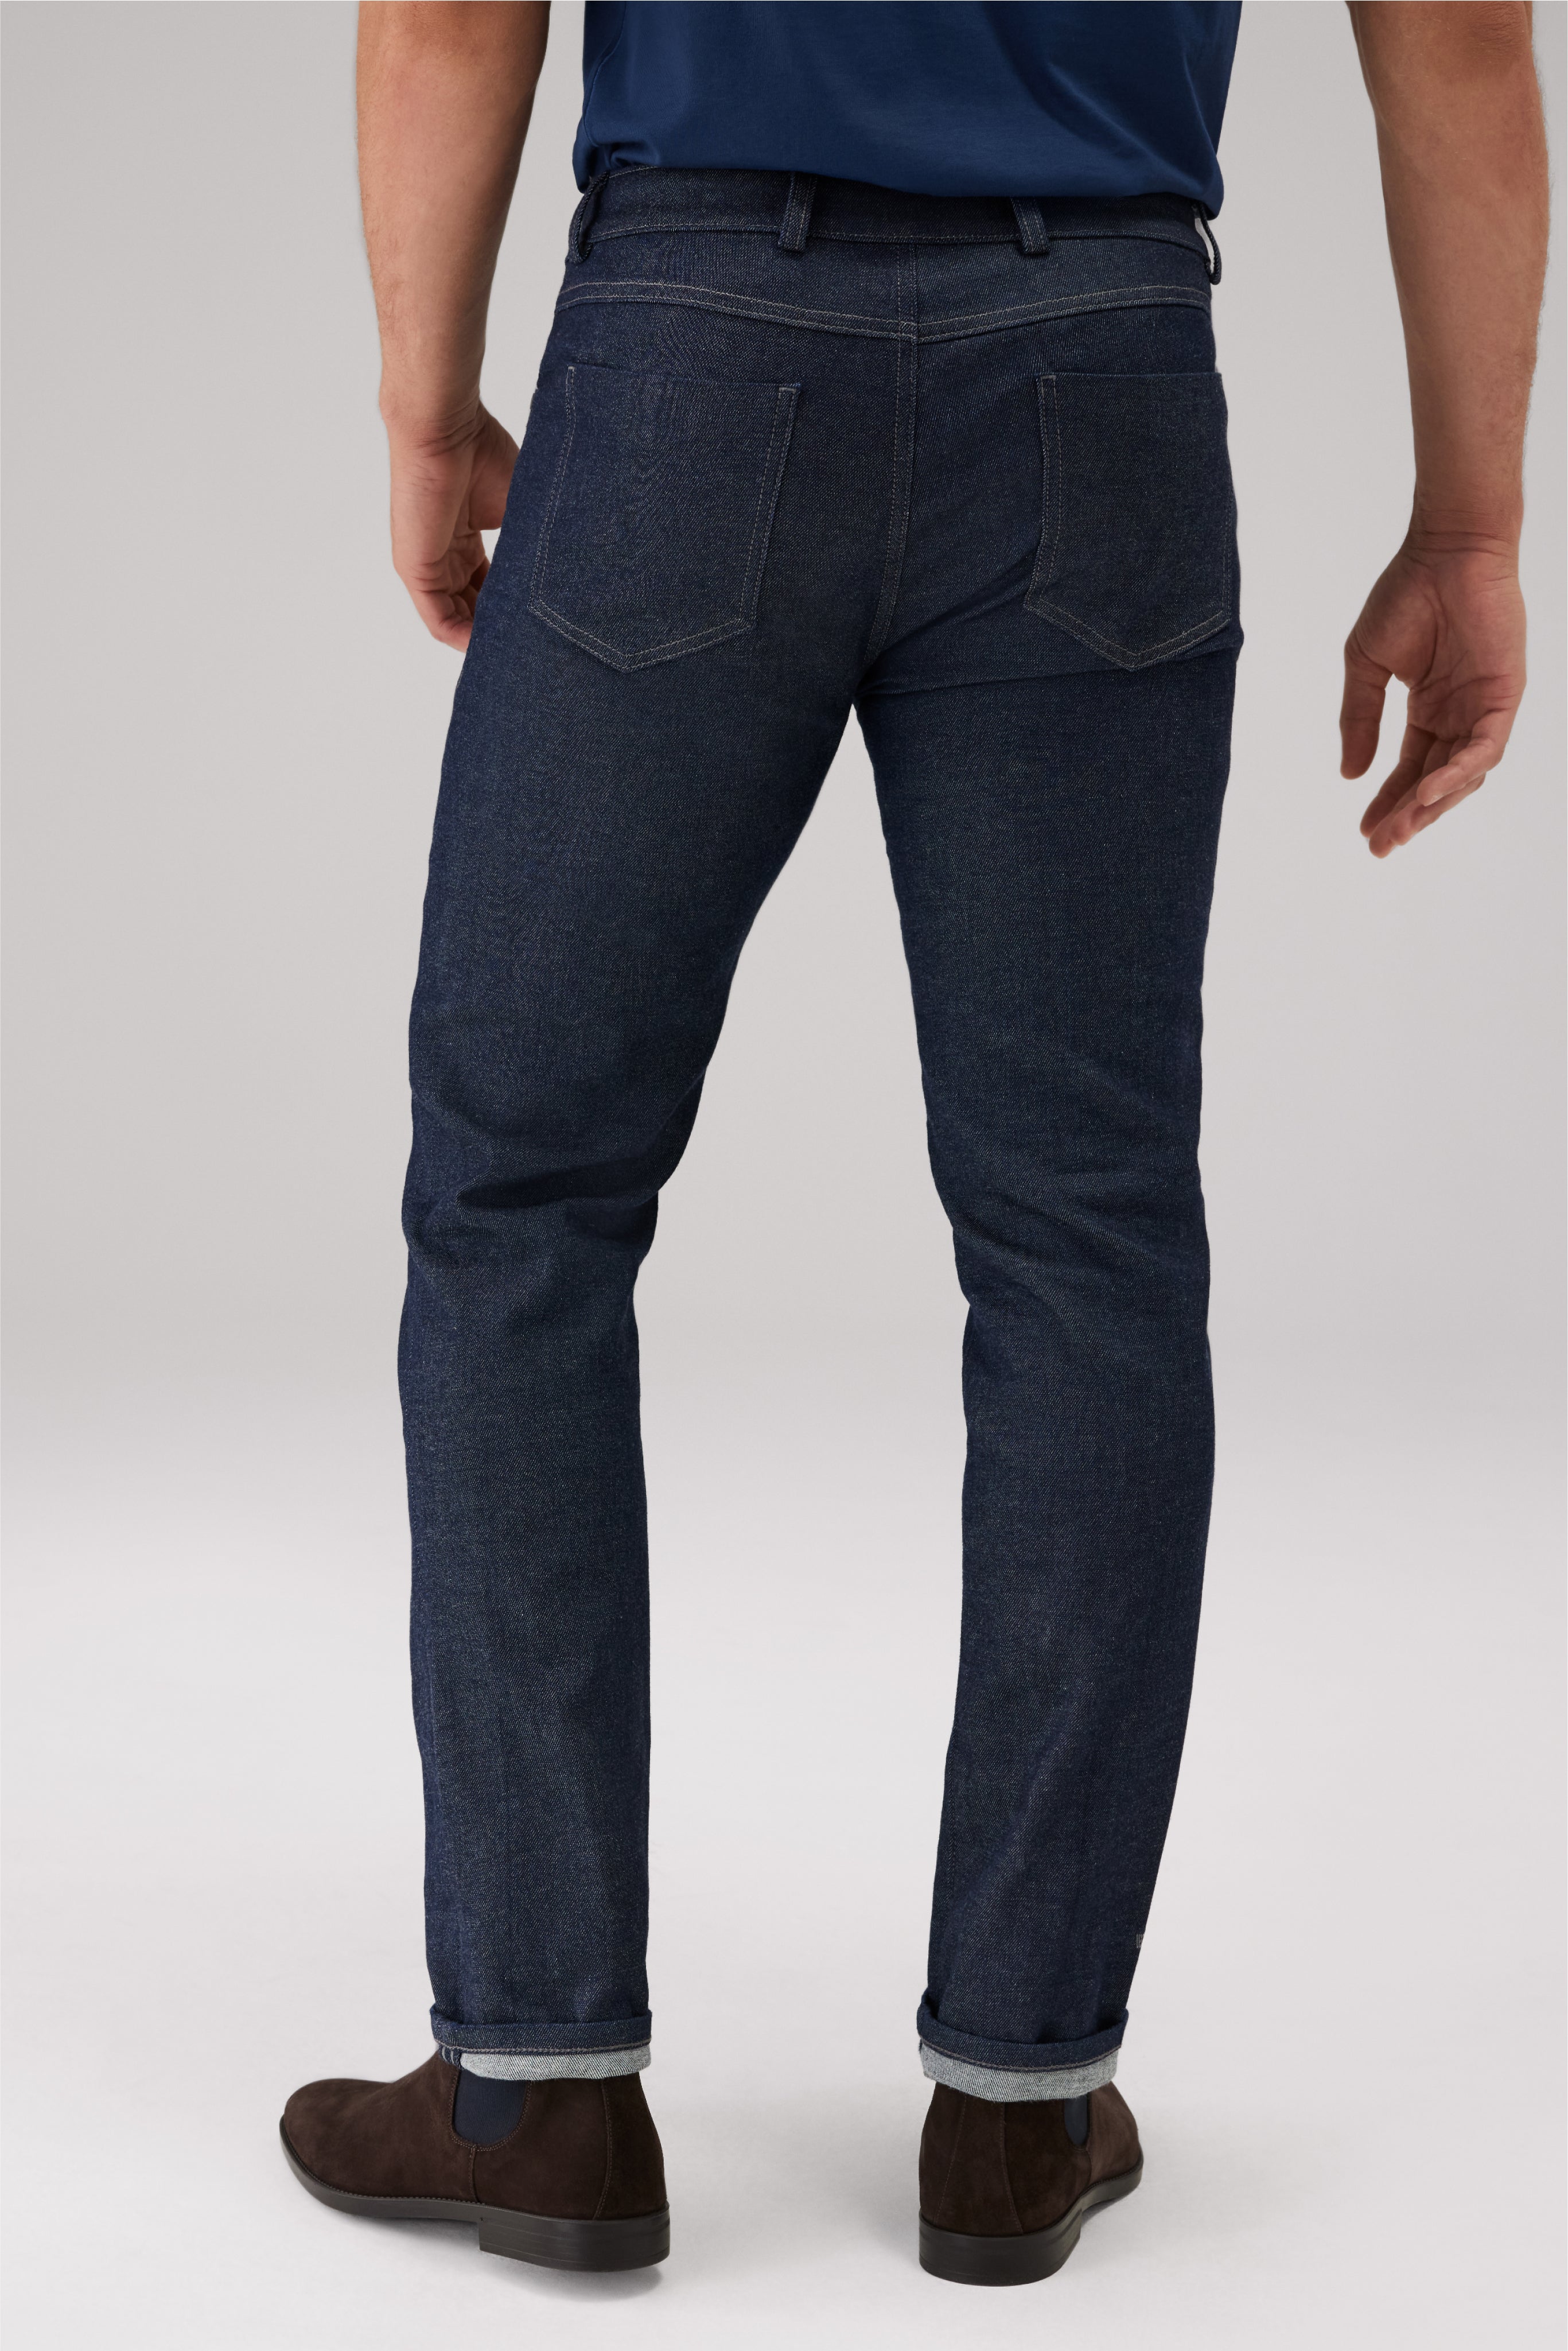 Popular Men's Fashion Brand Mack Weldon Launches World-First Jeans